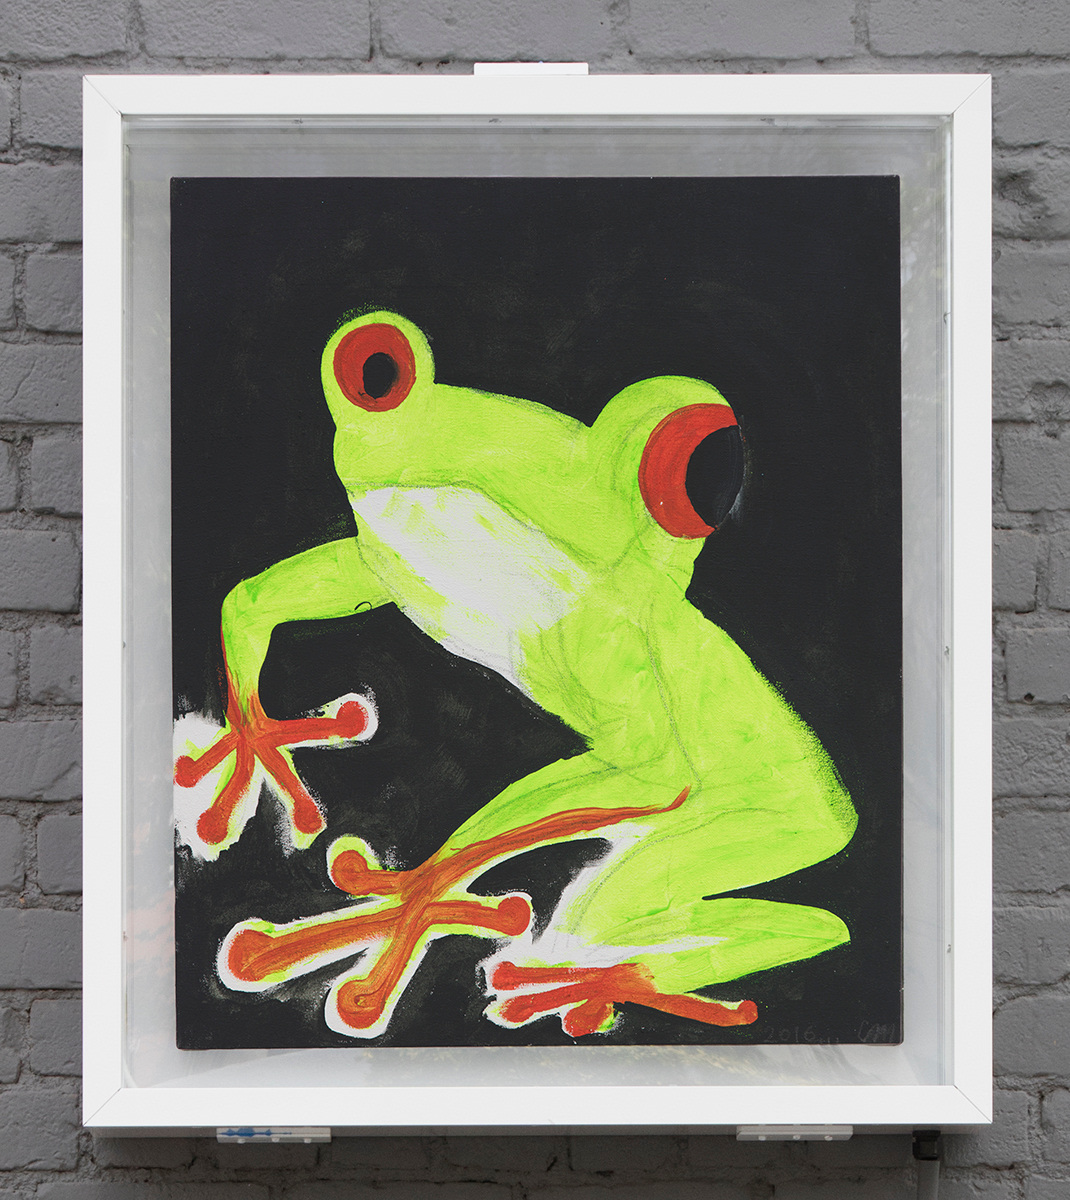 Chris Martin Frog 1, 2016